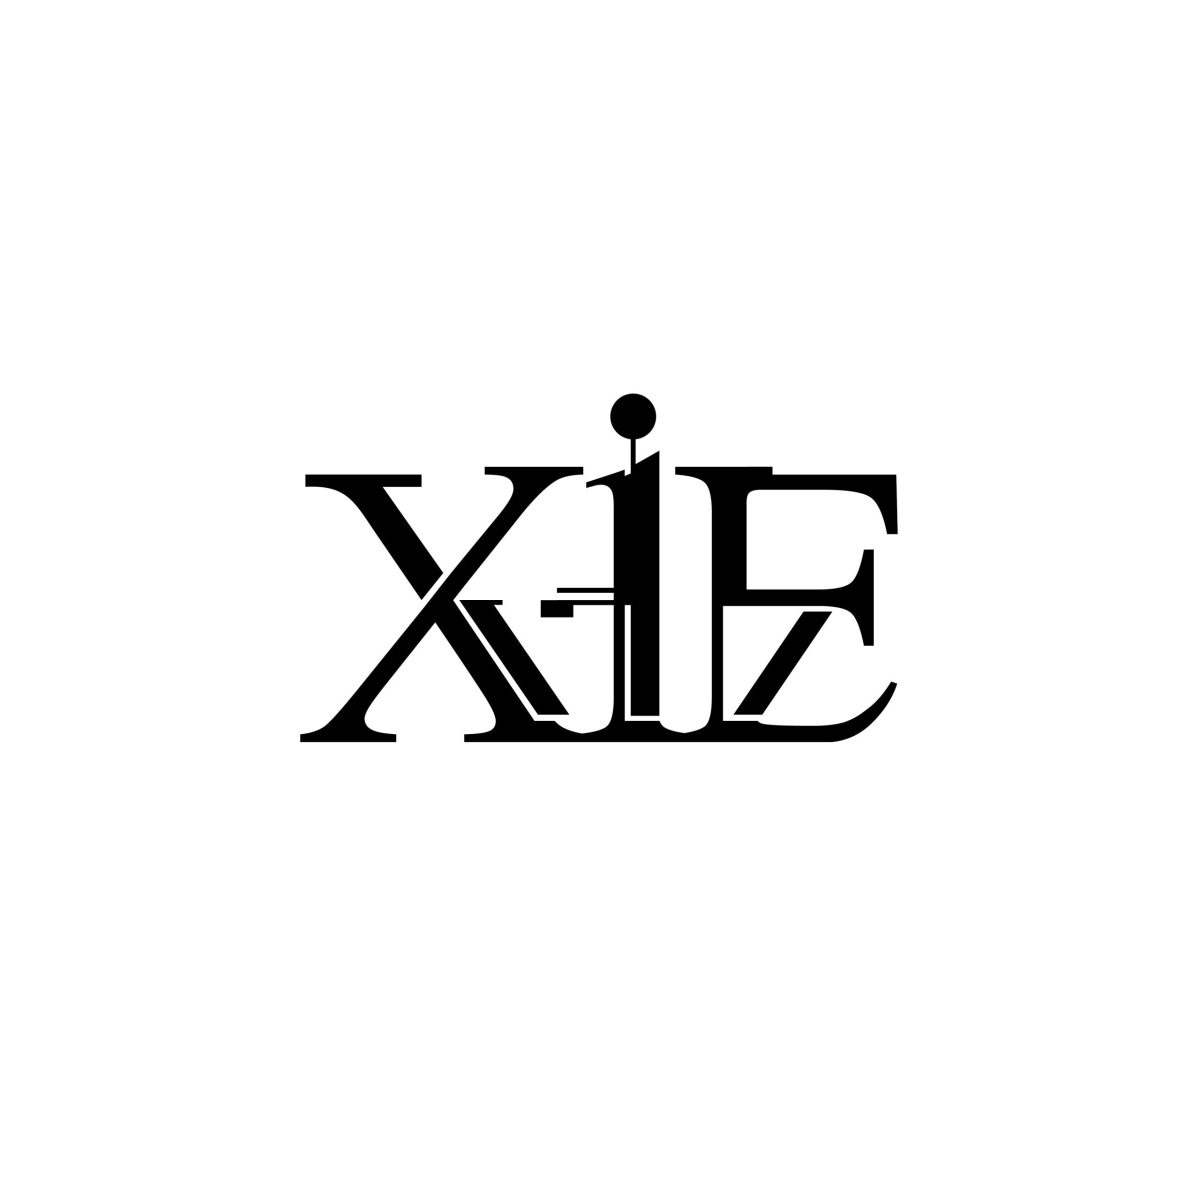 Logo__ZIE__black